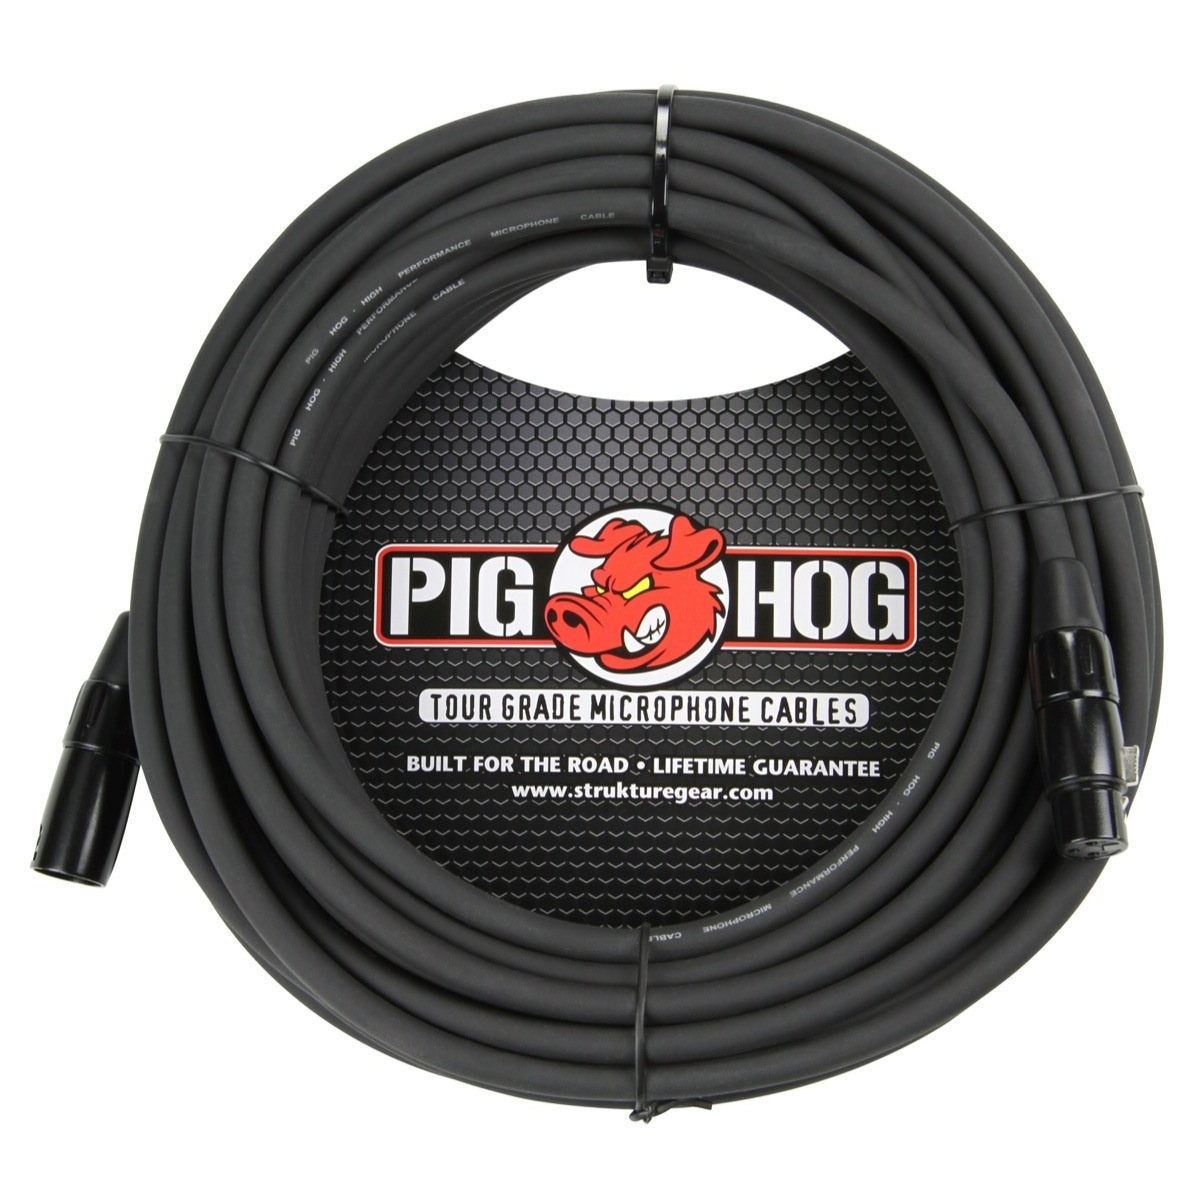 Pig Hog XLR Microphone Cable, 20 Foot